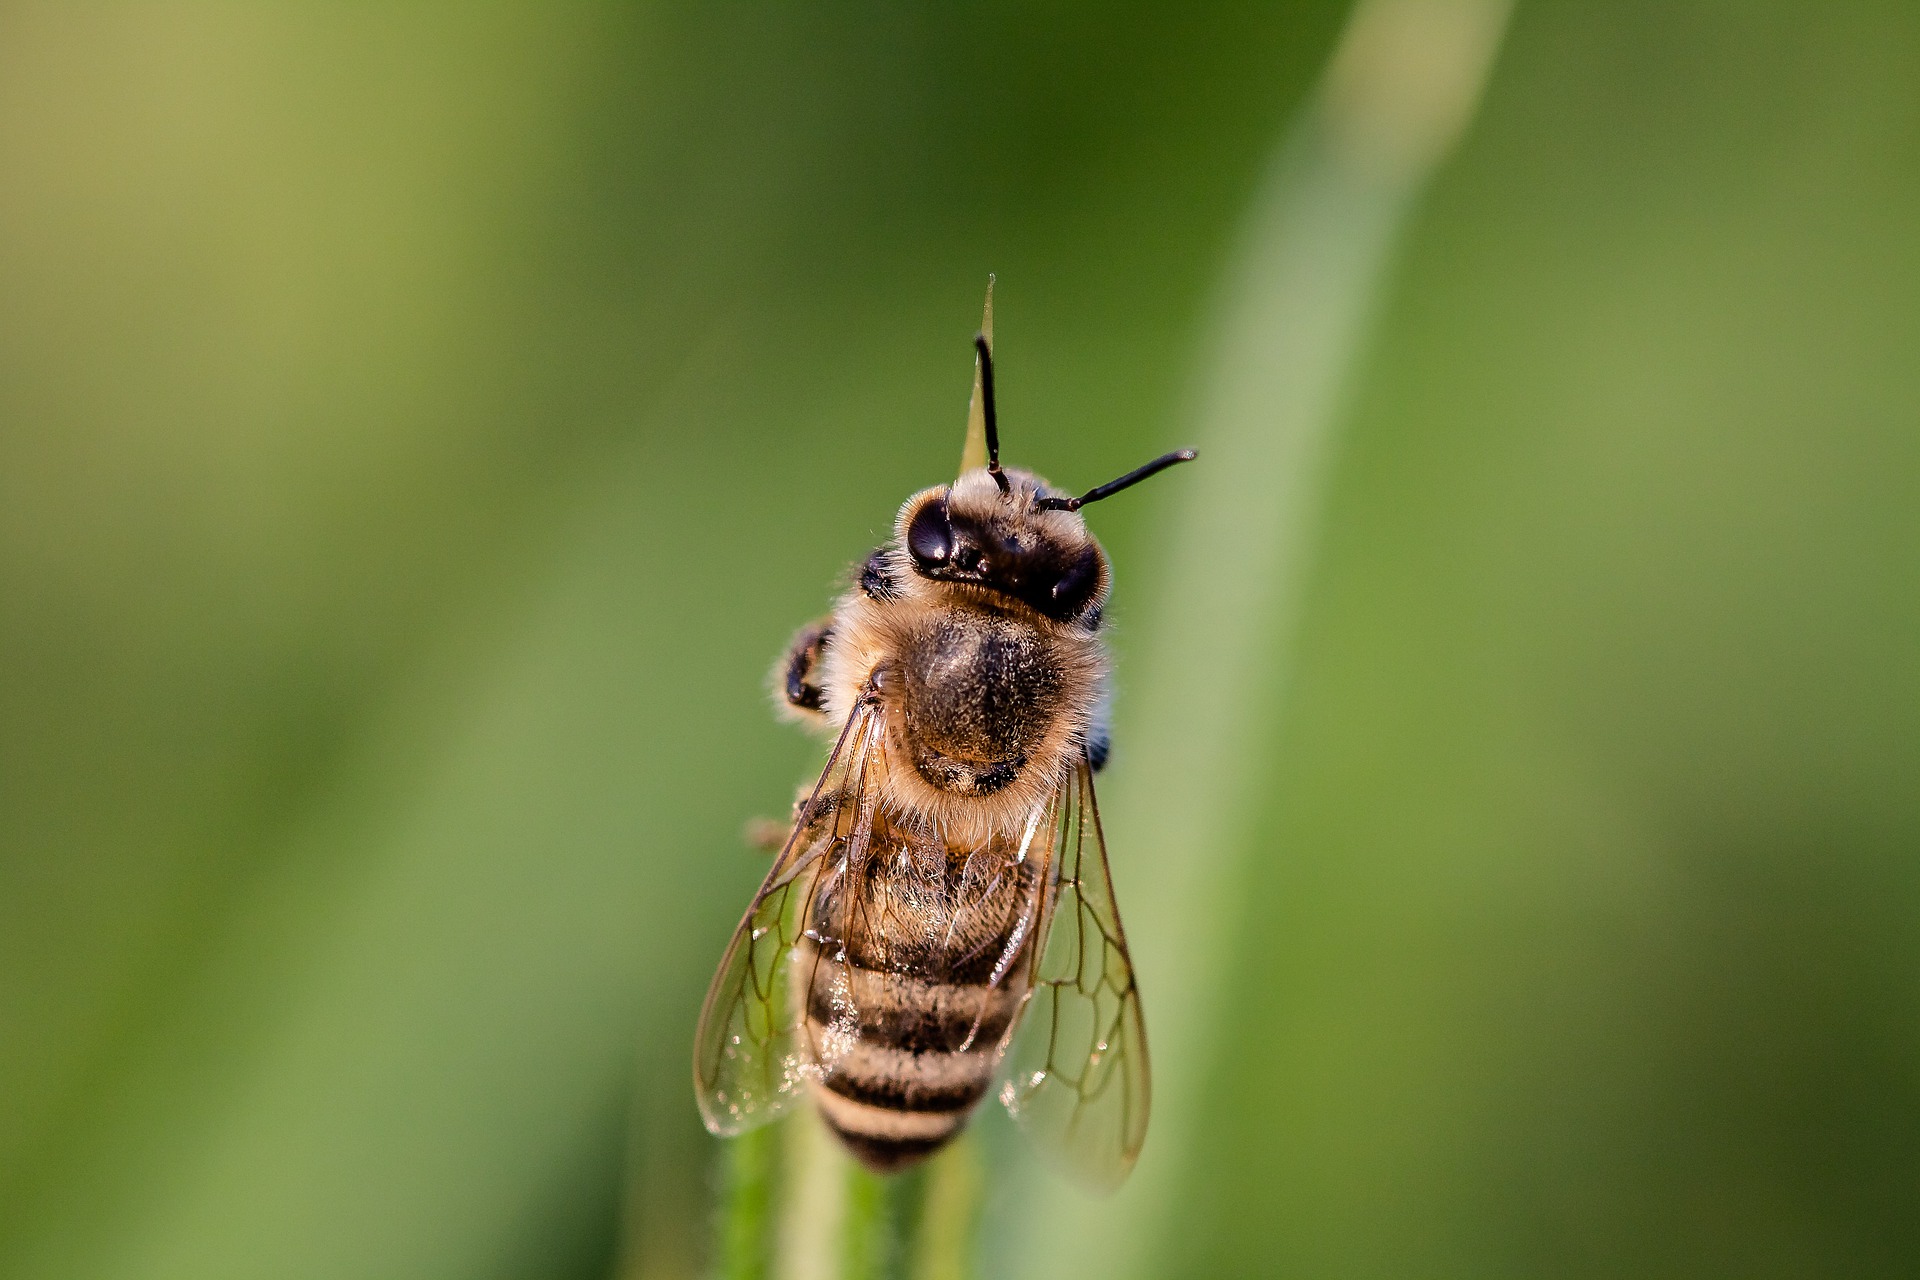 A bumblebee on a blade of grass